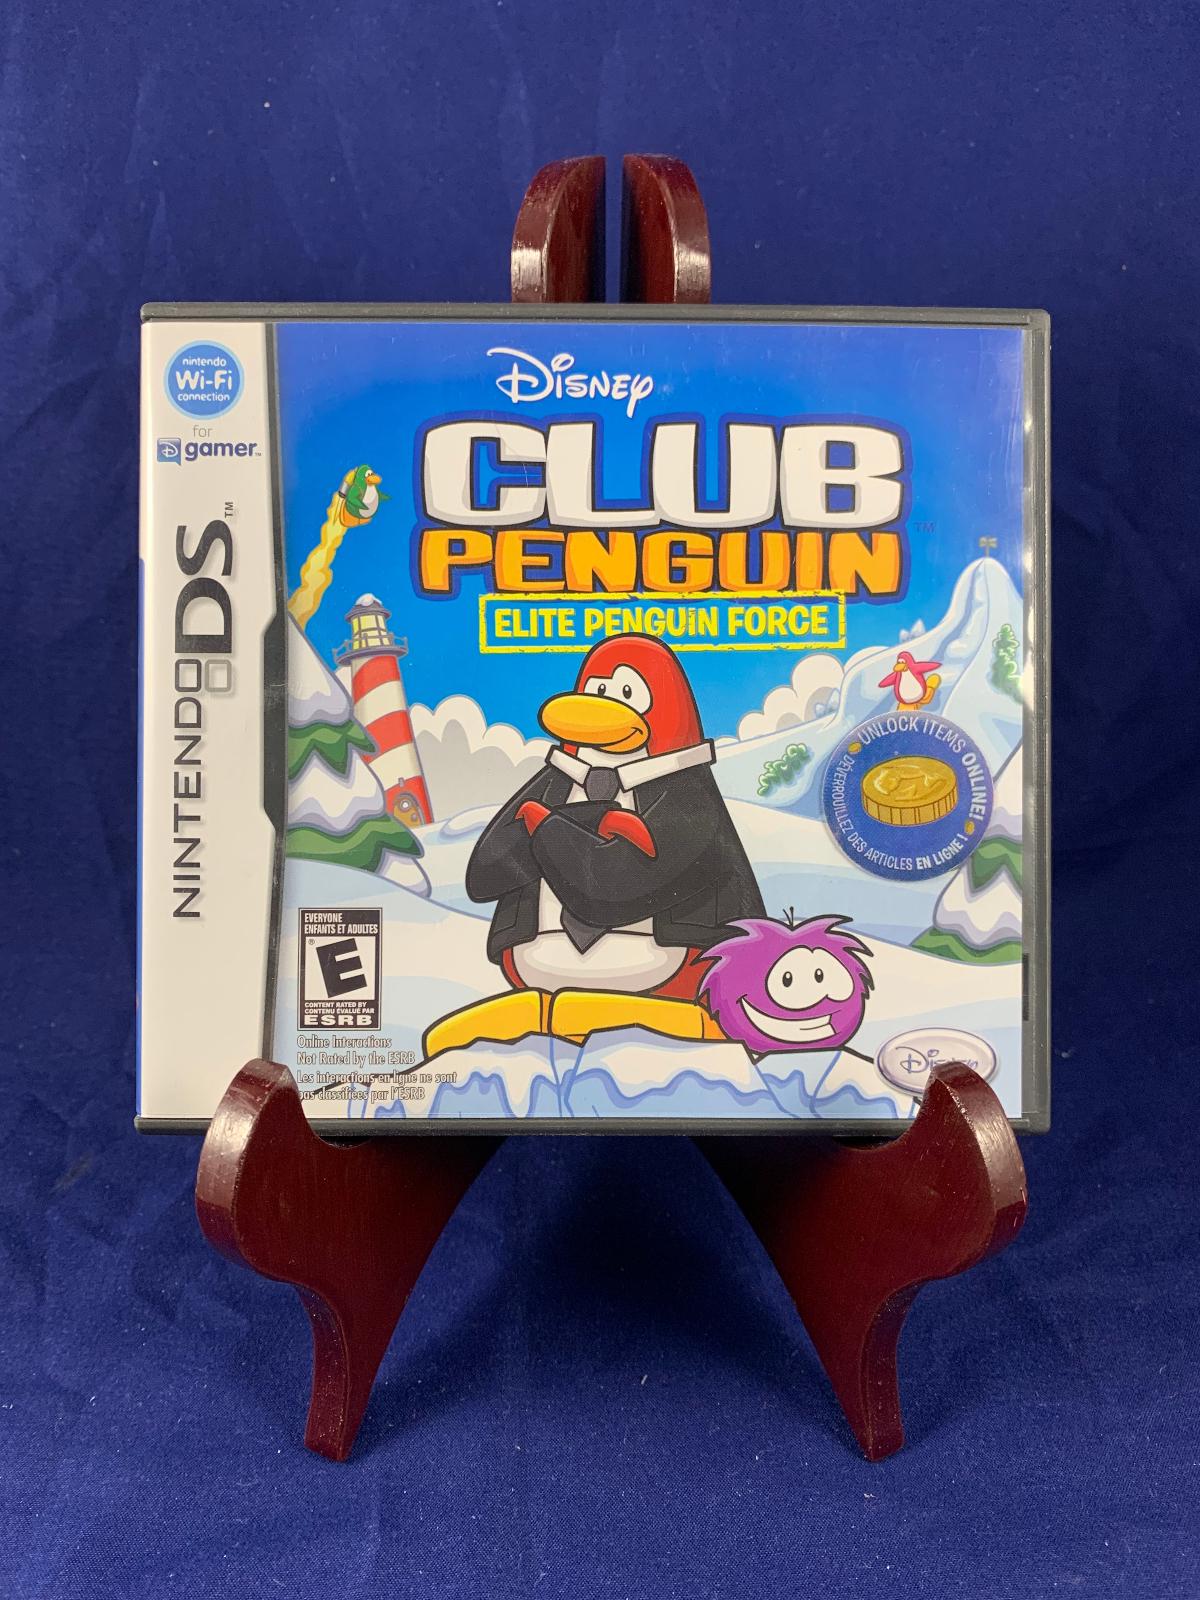 Club Penguin: Elite Penguin Force, Item, Box, and Manual